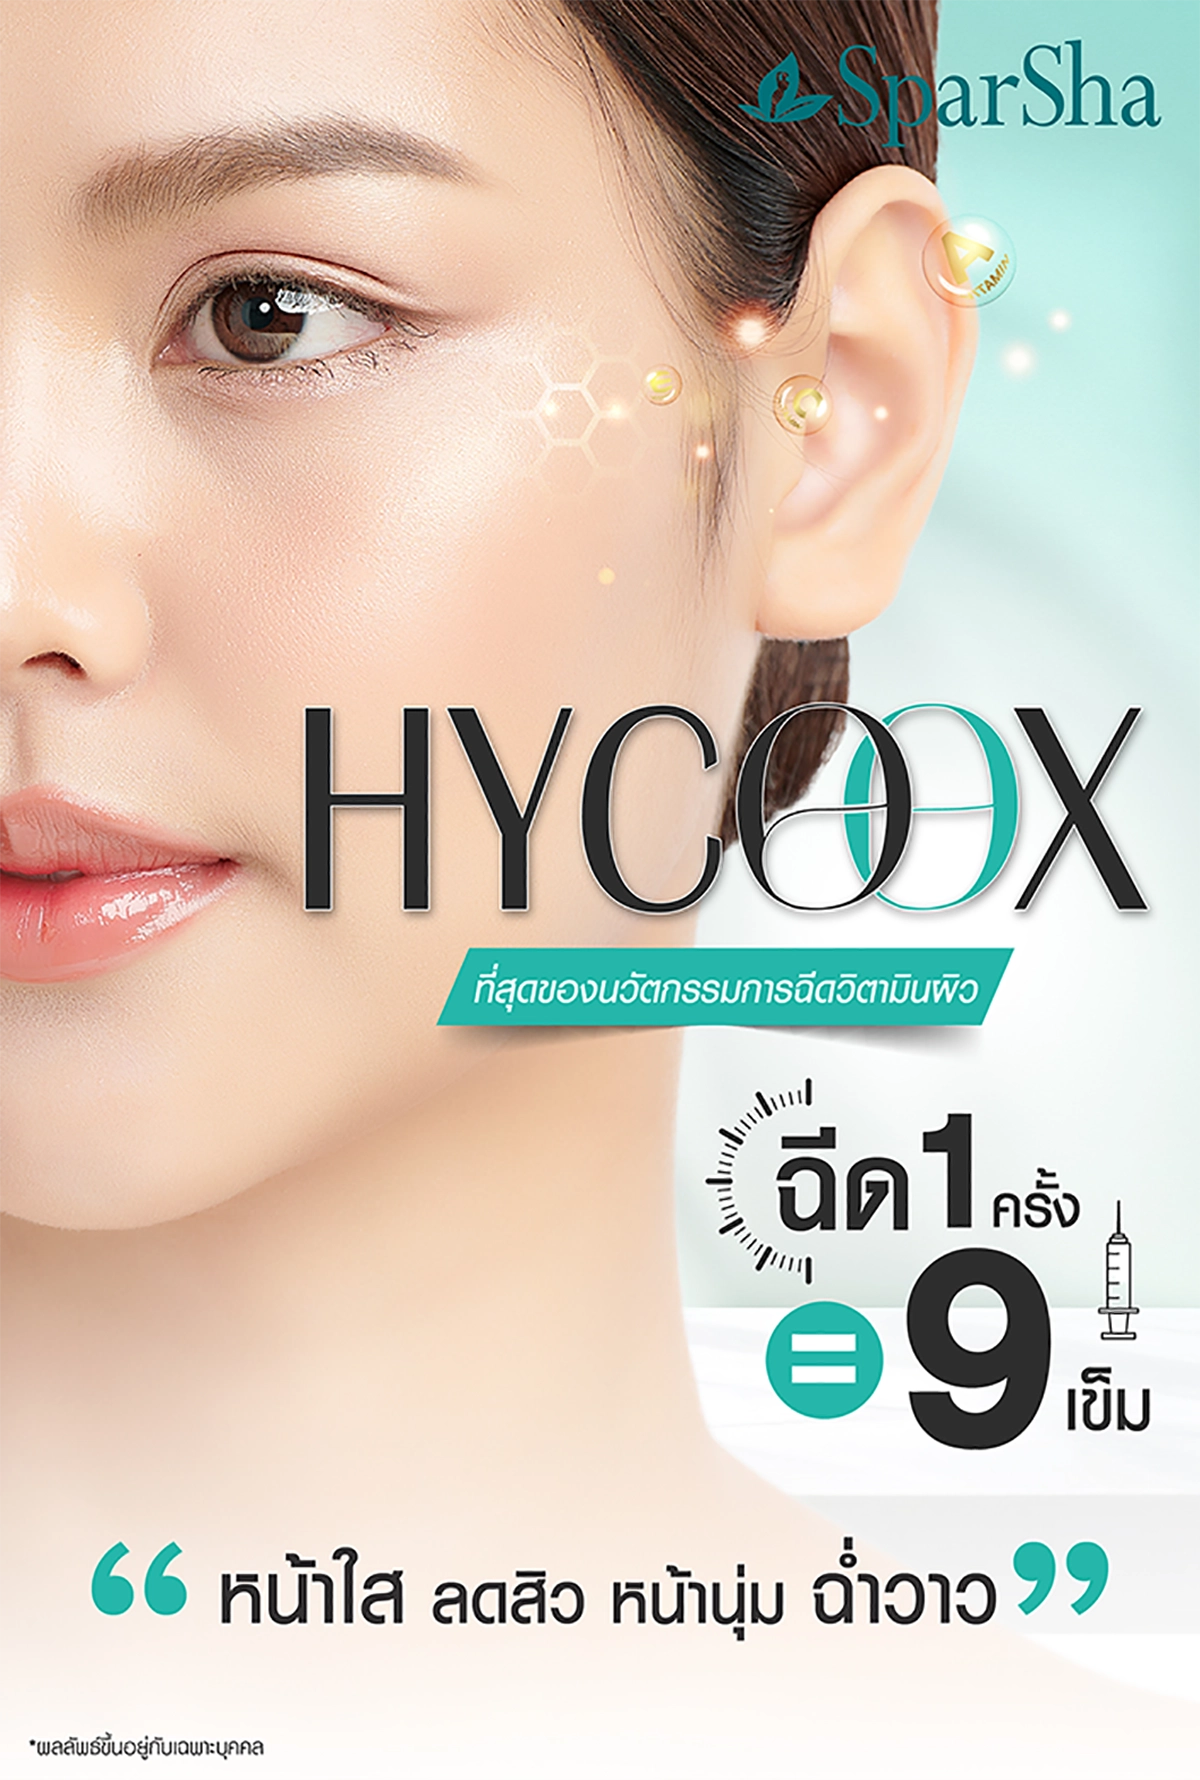 Hycoox